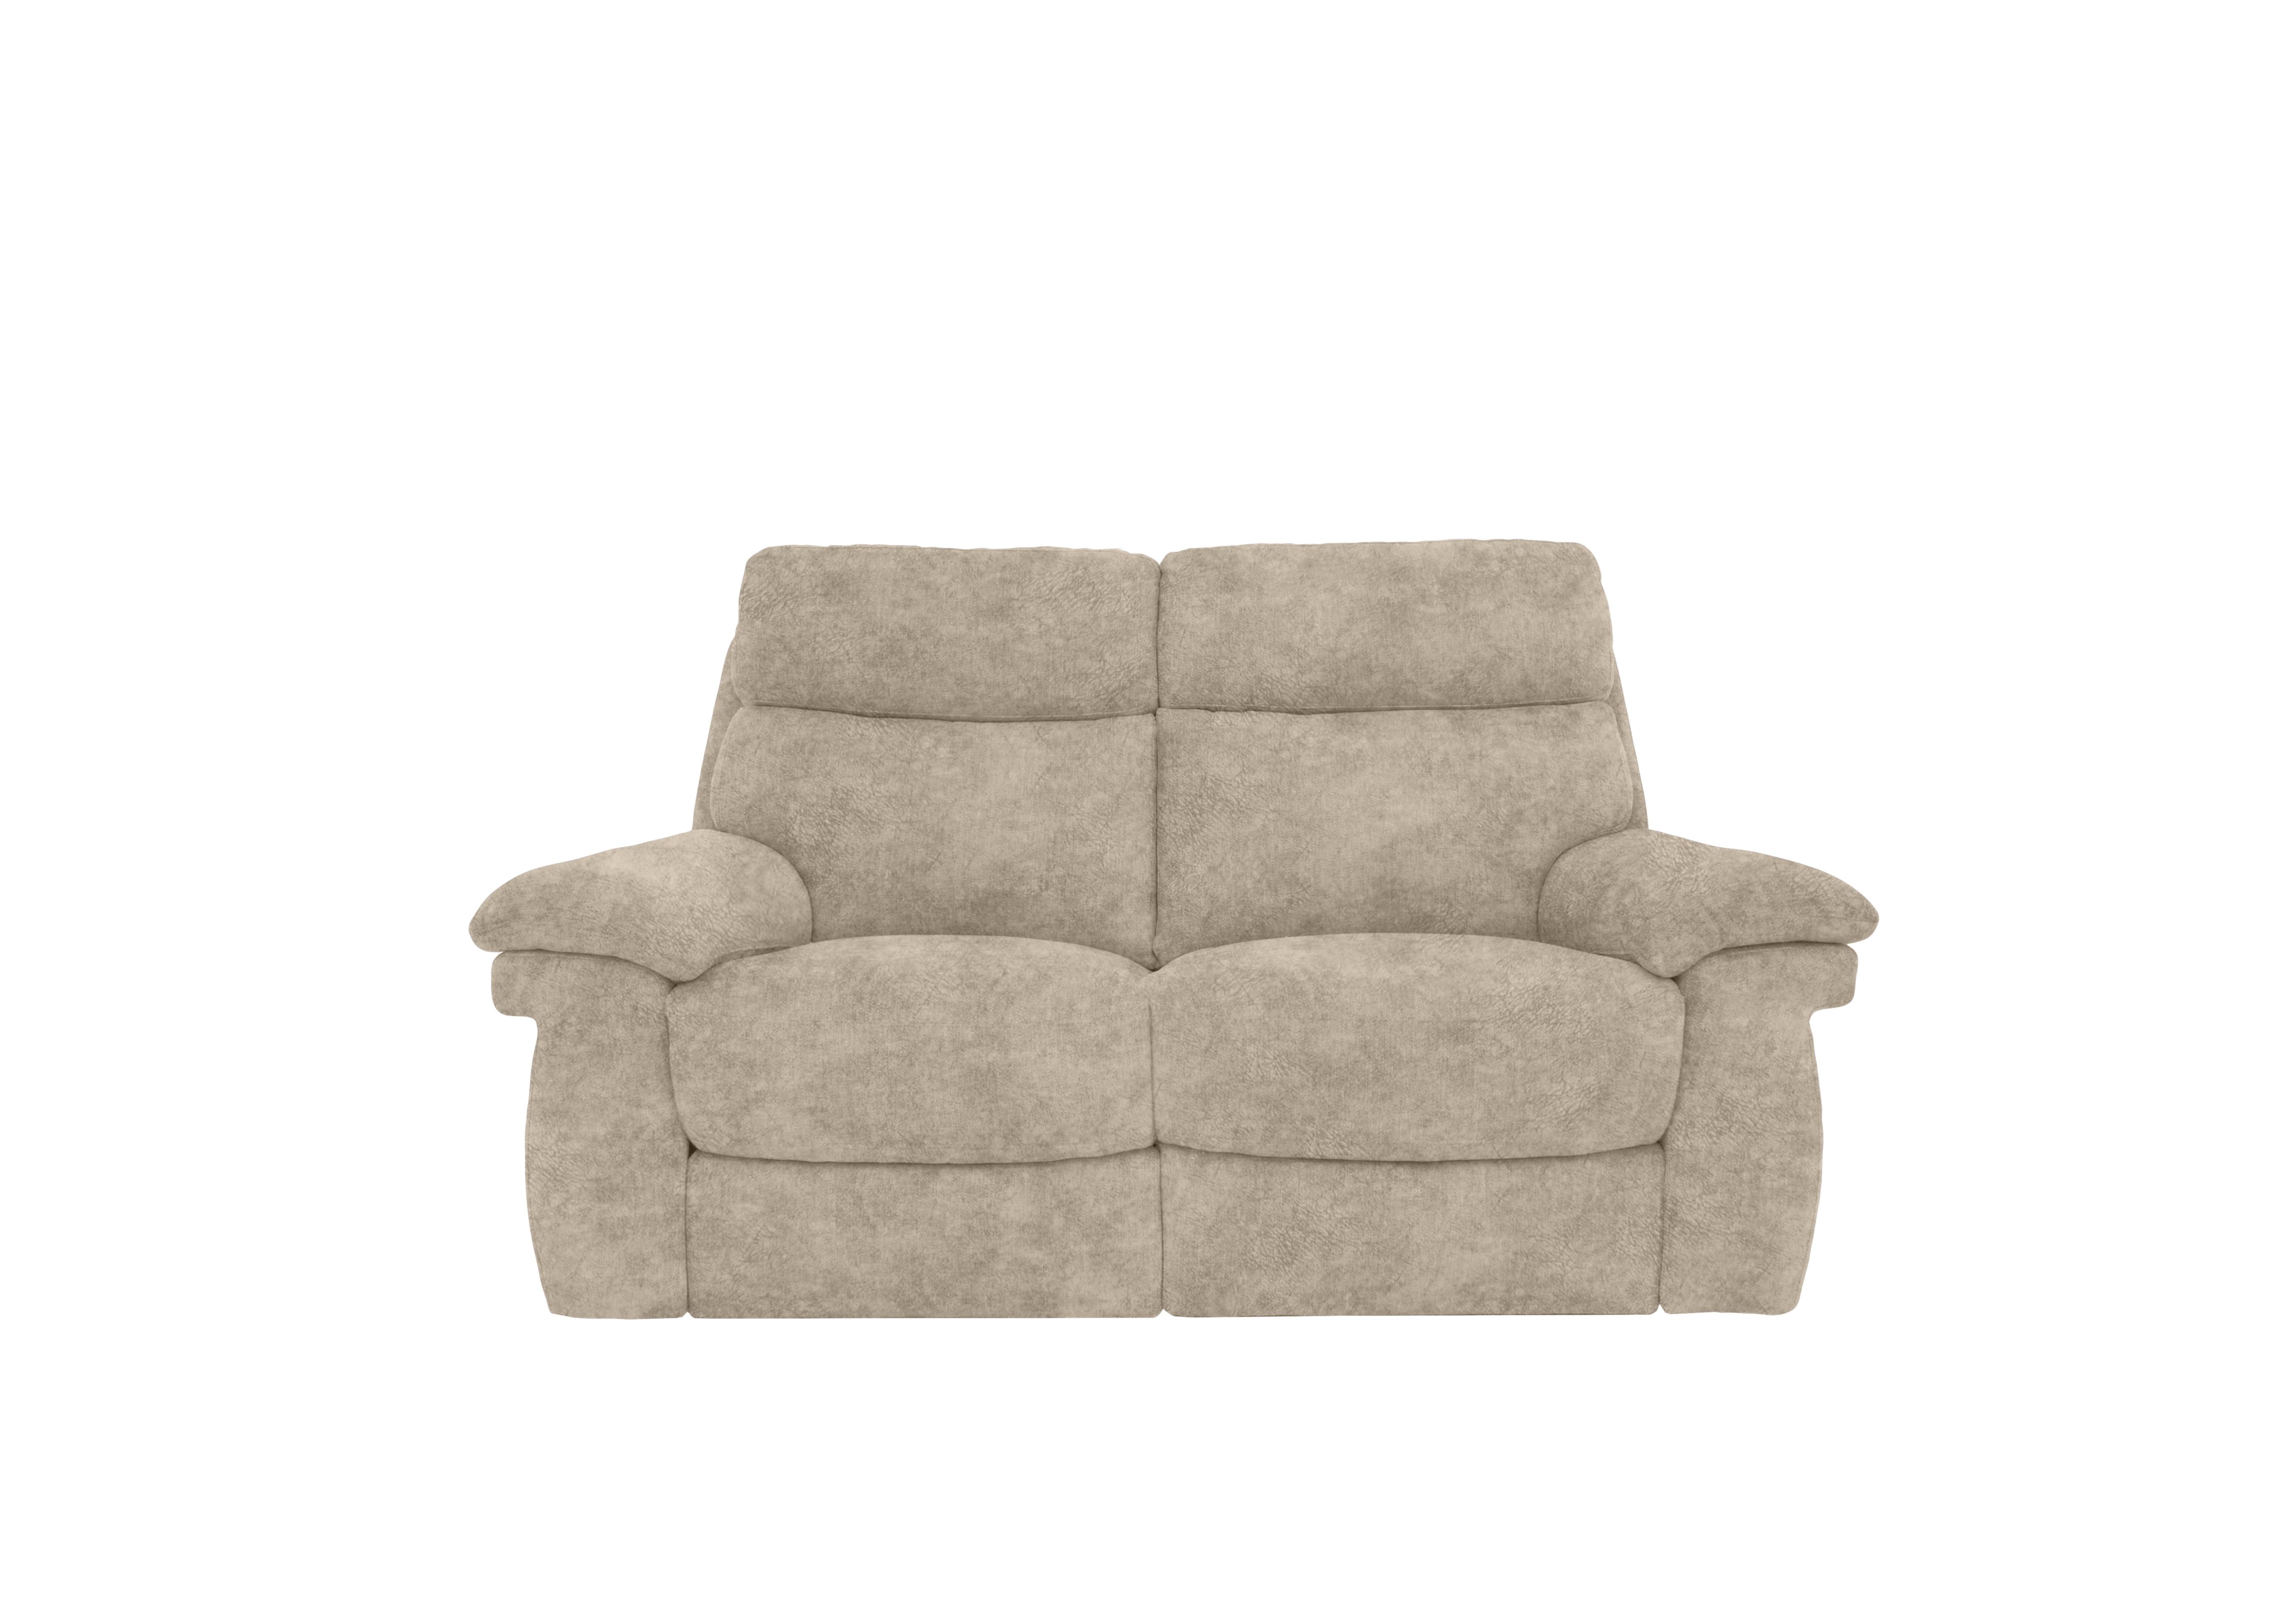 Serene 2 Seater Fabric Power Recliner Sofa with Power Headrests in Bfa-Bnn-R26 Cream on Furniture Village